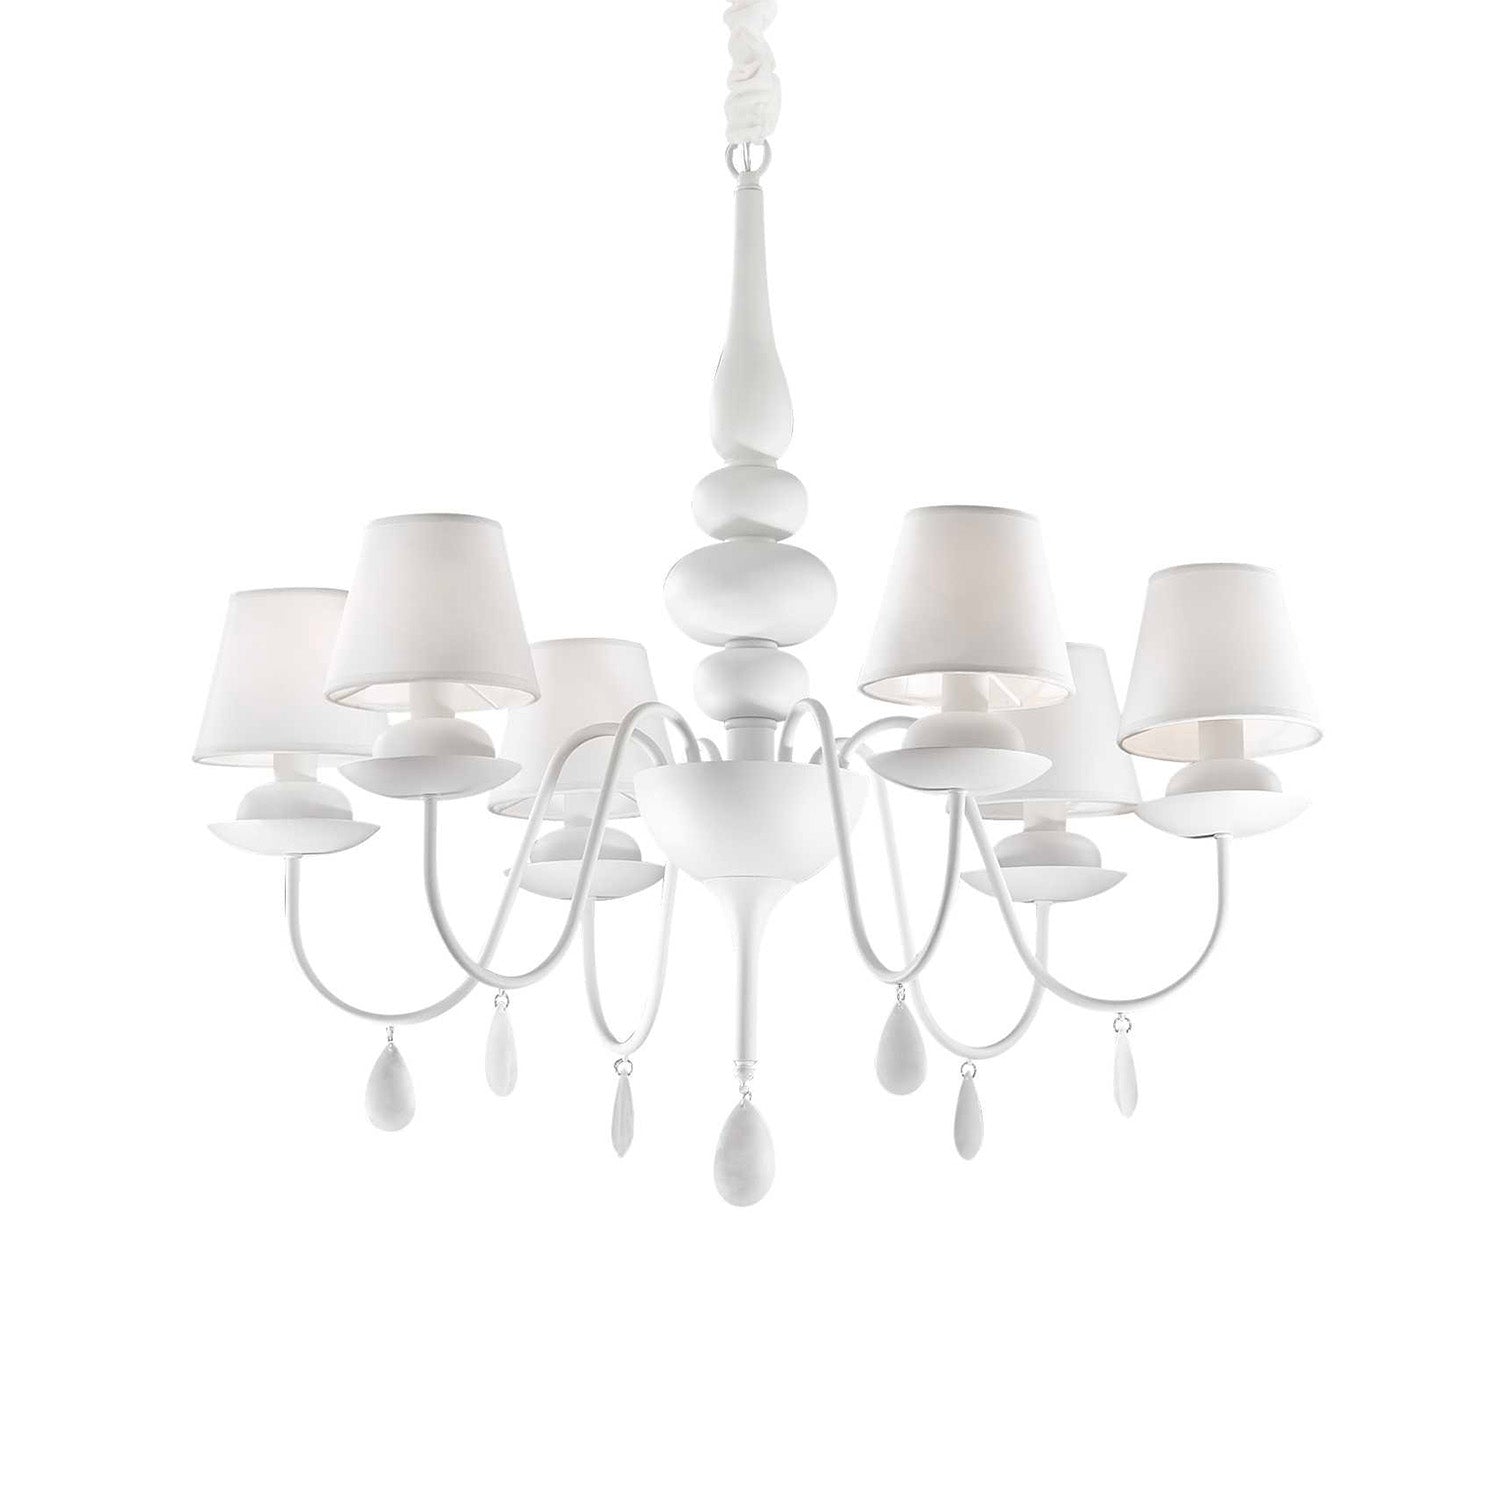 WHITE - Chandelier chandelier with white or black tassels